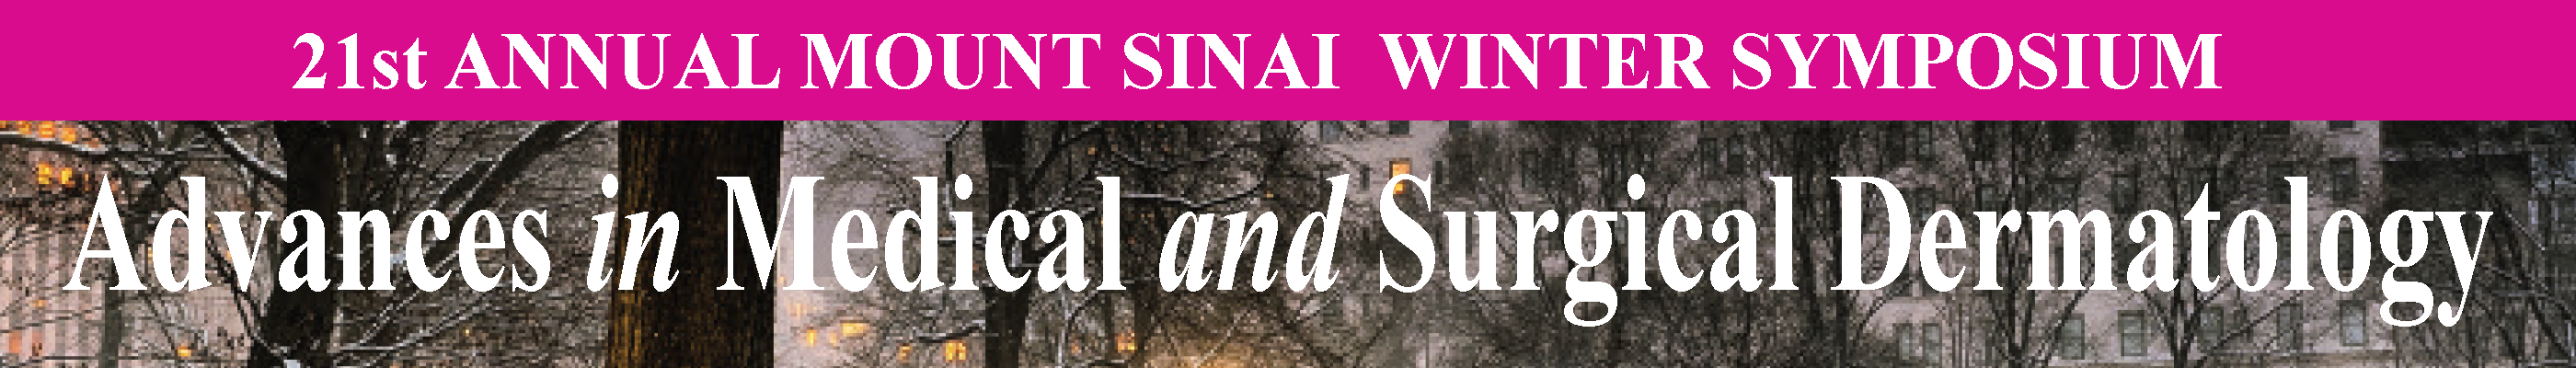 21st Annual Mount Sinai Winter Symposium Banner